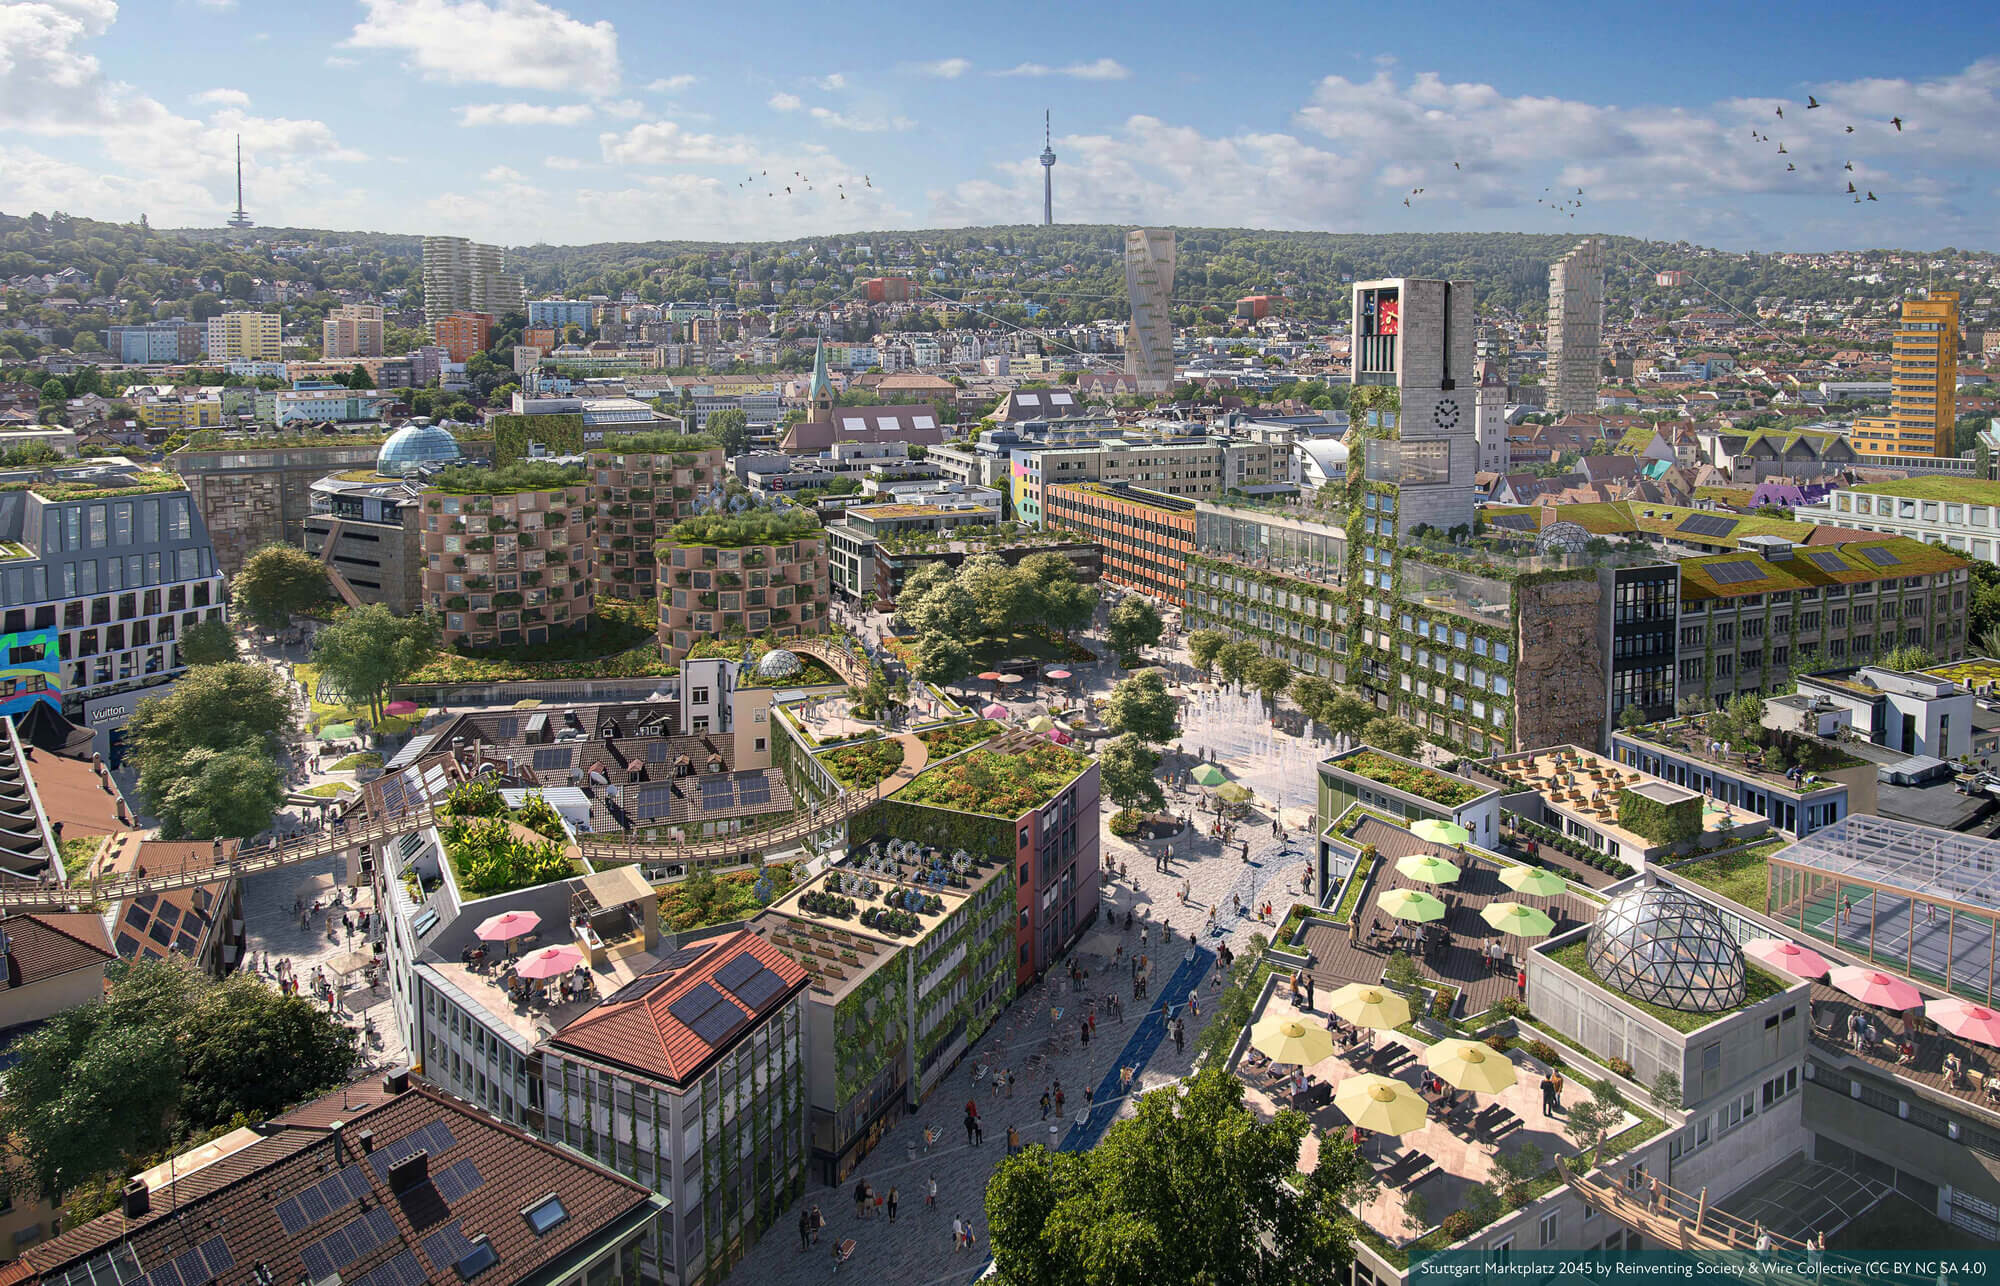 Stuttgart Marktplatz 2045 by Reinventing Society / Render Vision, CC BY-NC-SA 4.0